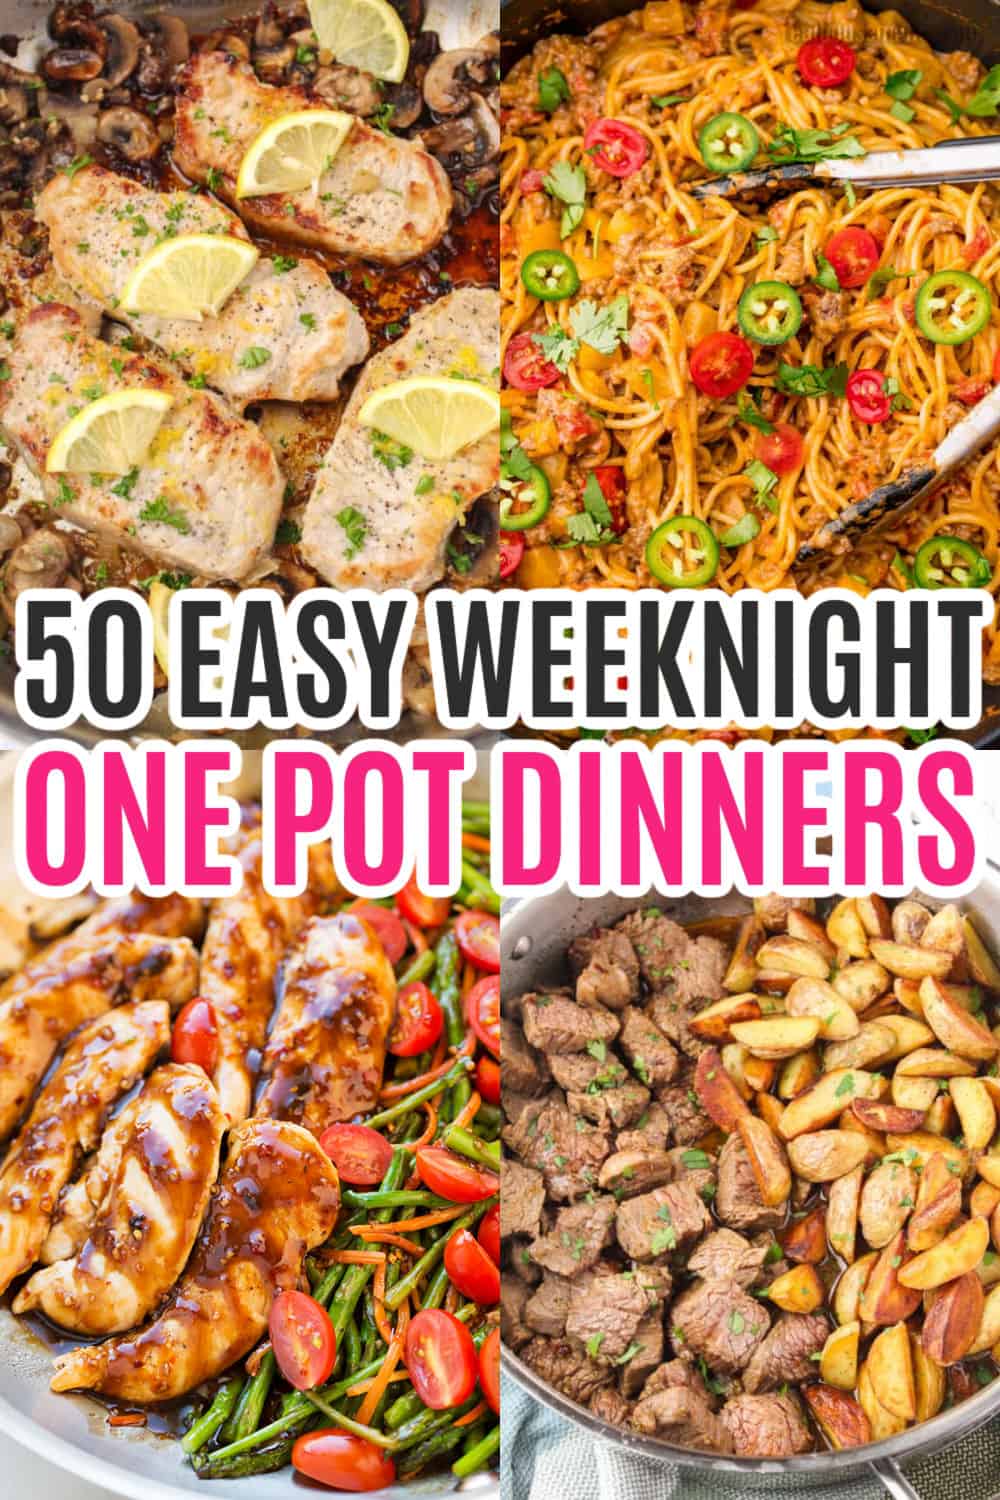 54 Best One-Pot Meals - Easy Dinner Ideas